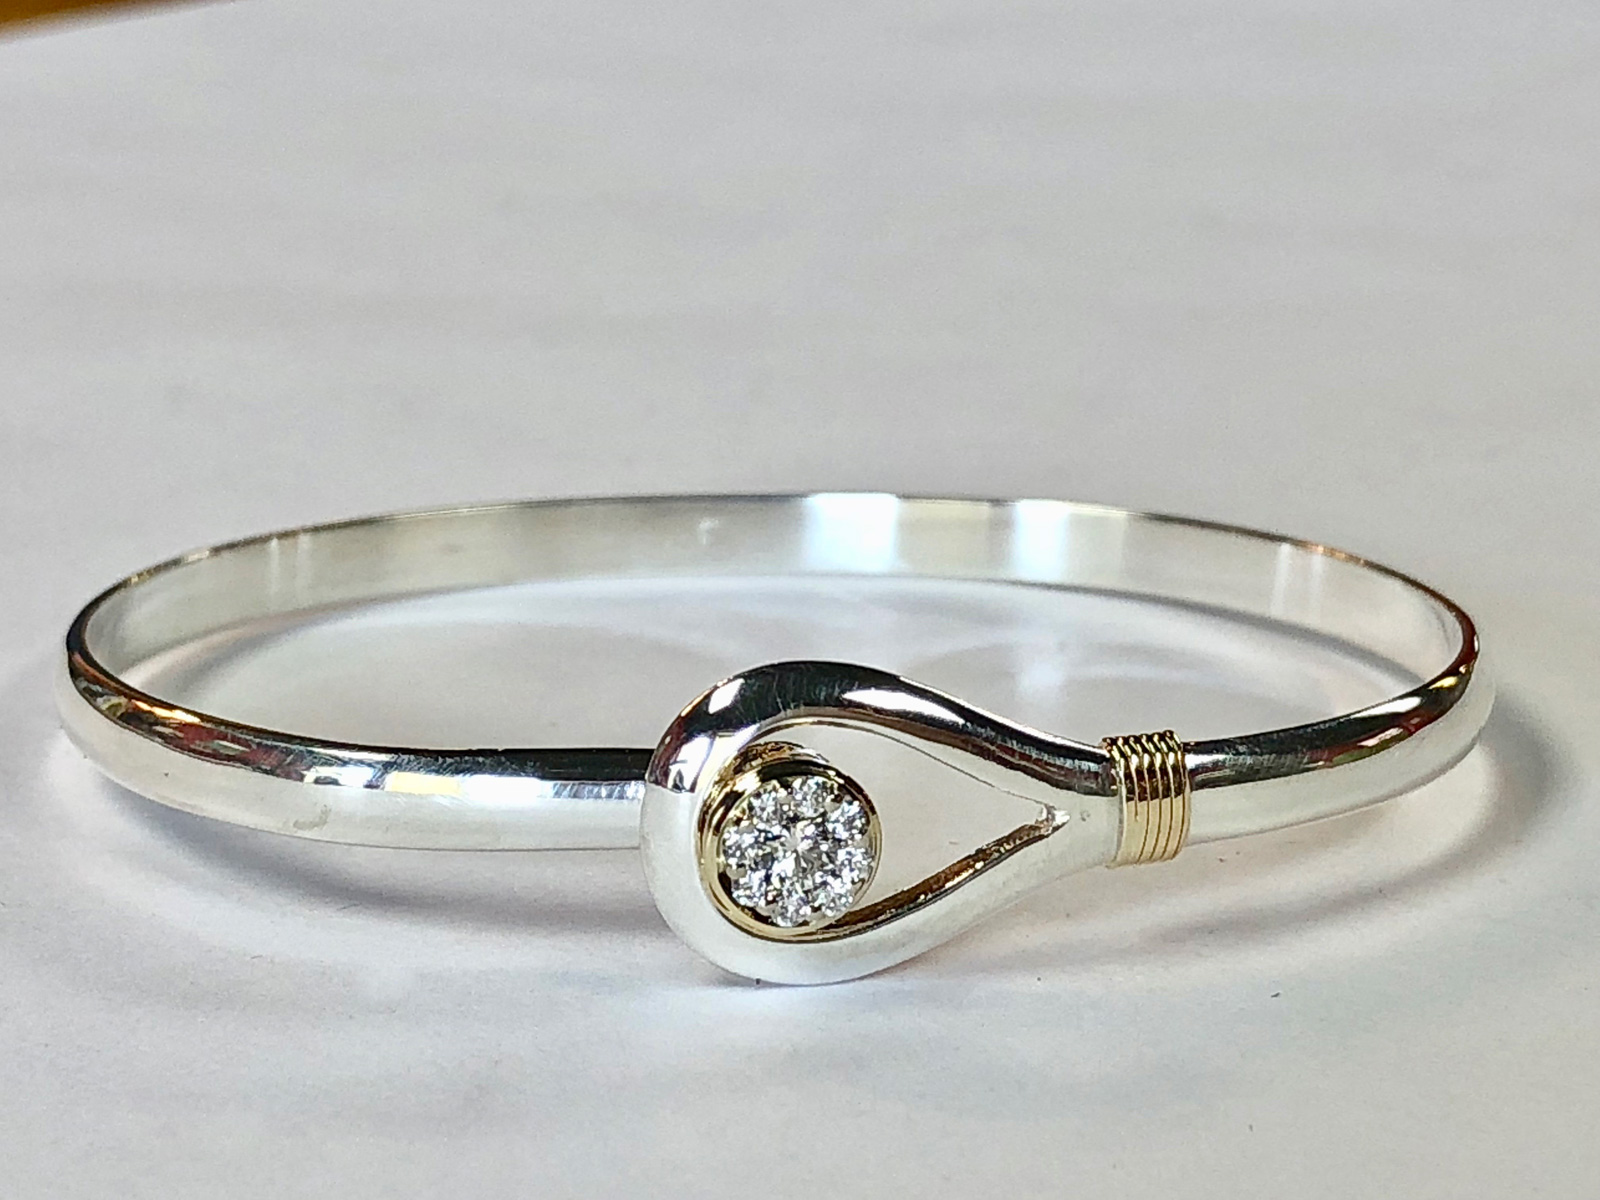 DiamondJewelryNY Eye Hook Bangle Bracelet with a Plain Disc Charm. 